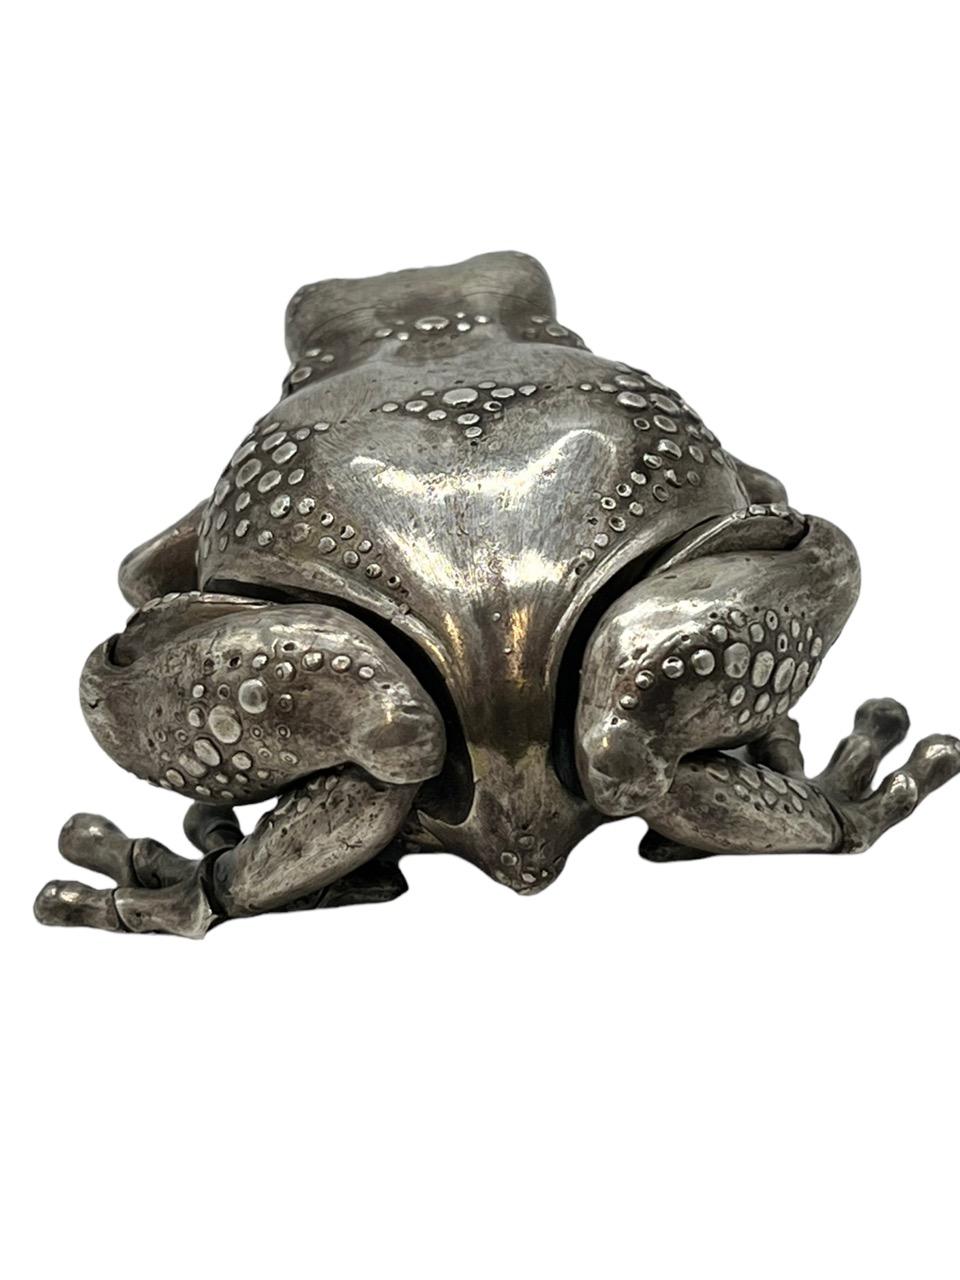 Oleg Konstantinov Fully Articulated Frog Made of Sterling Silver 1